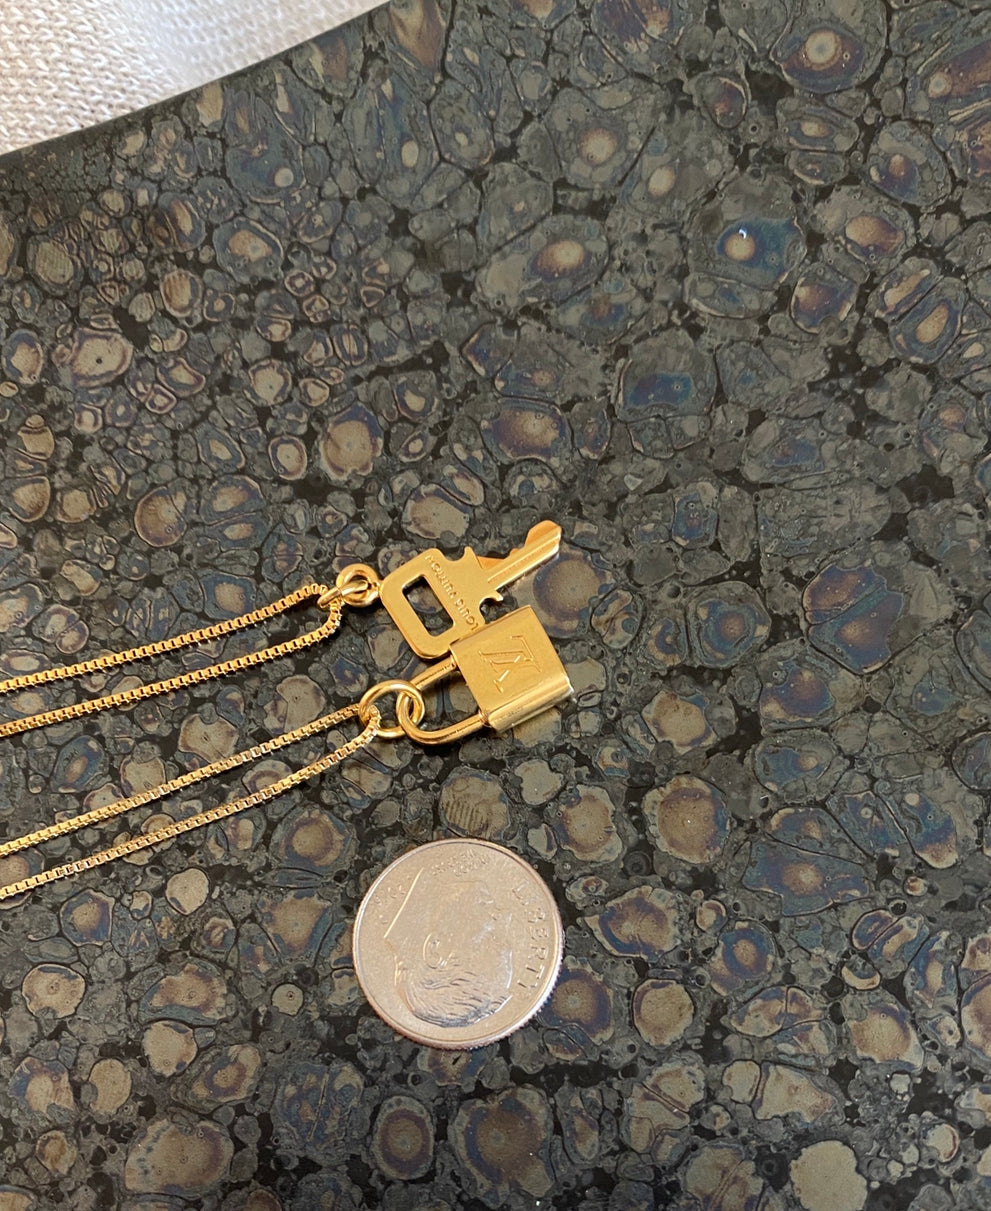 Repurposed Gold Louis Vuitton Rare Key Charm Necklace